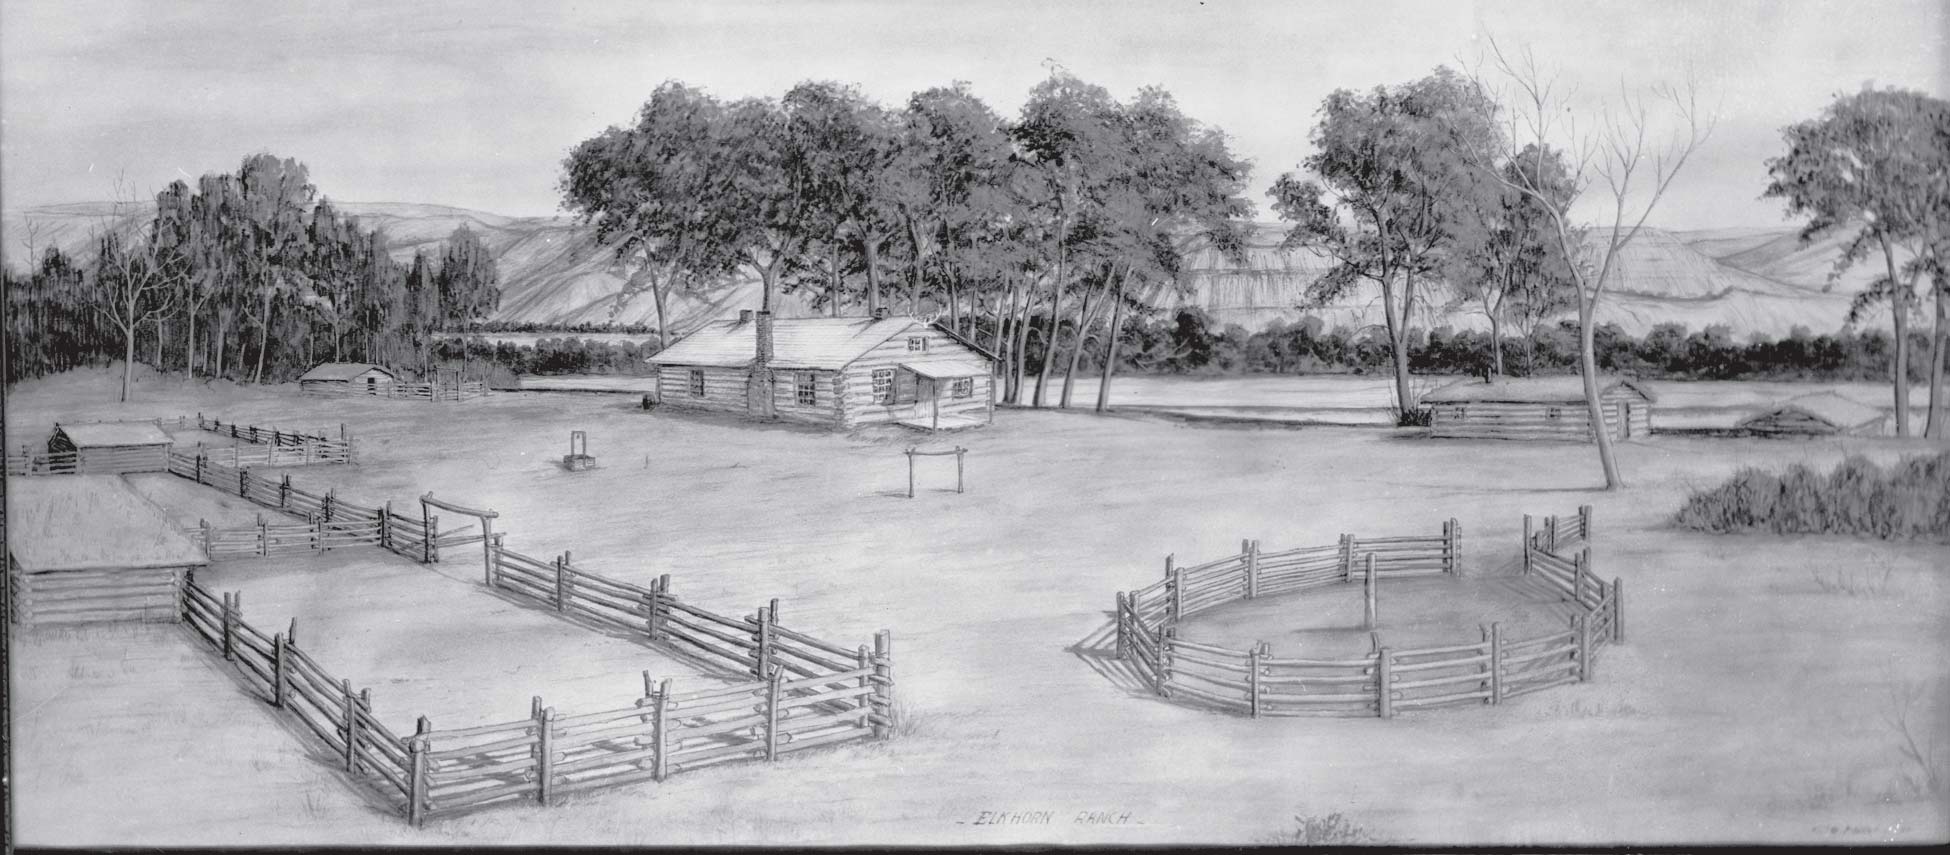 Elkhorn Ranch